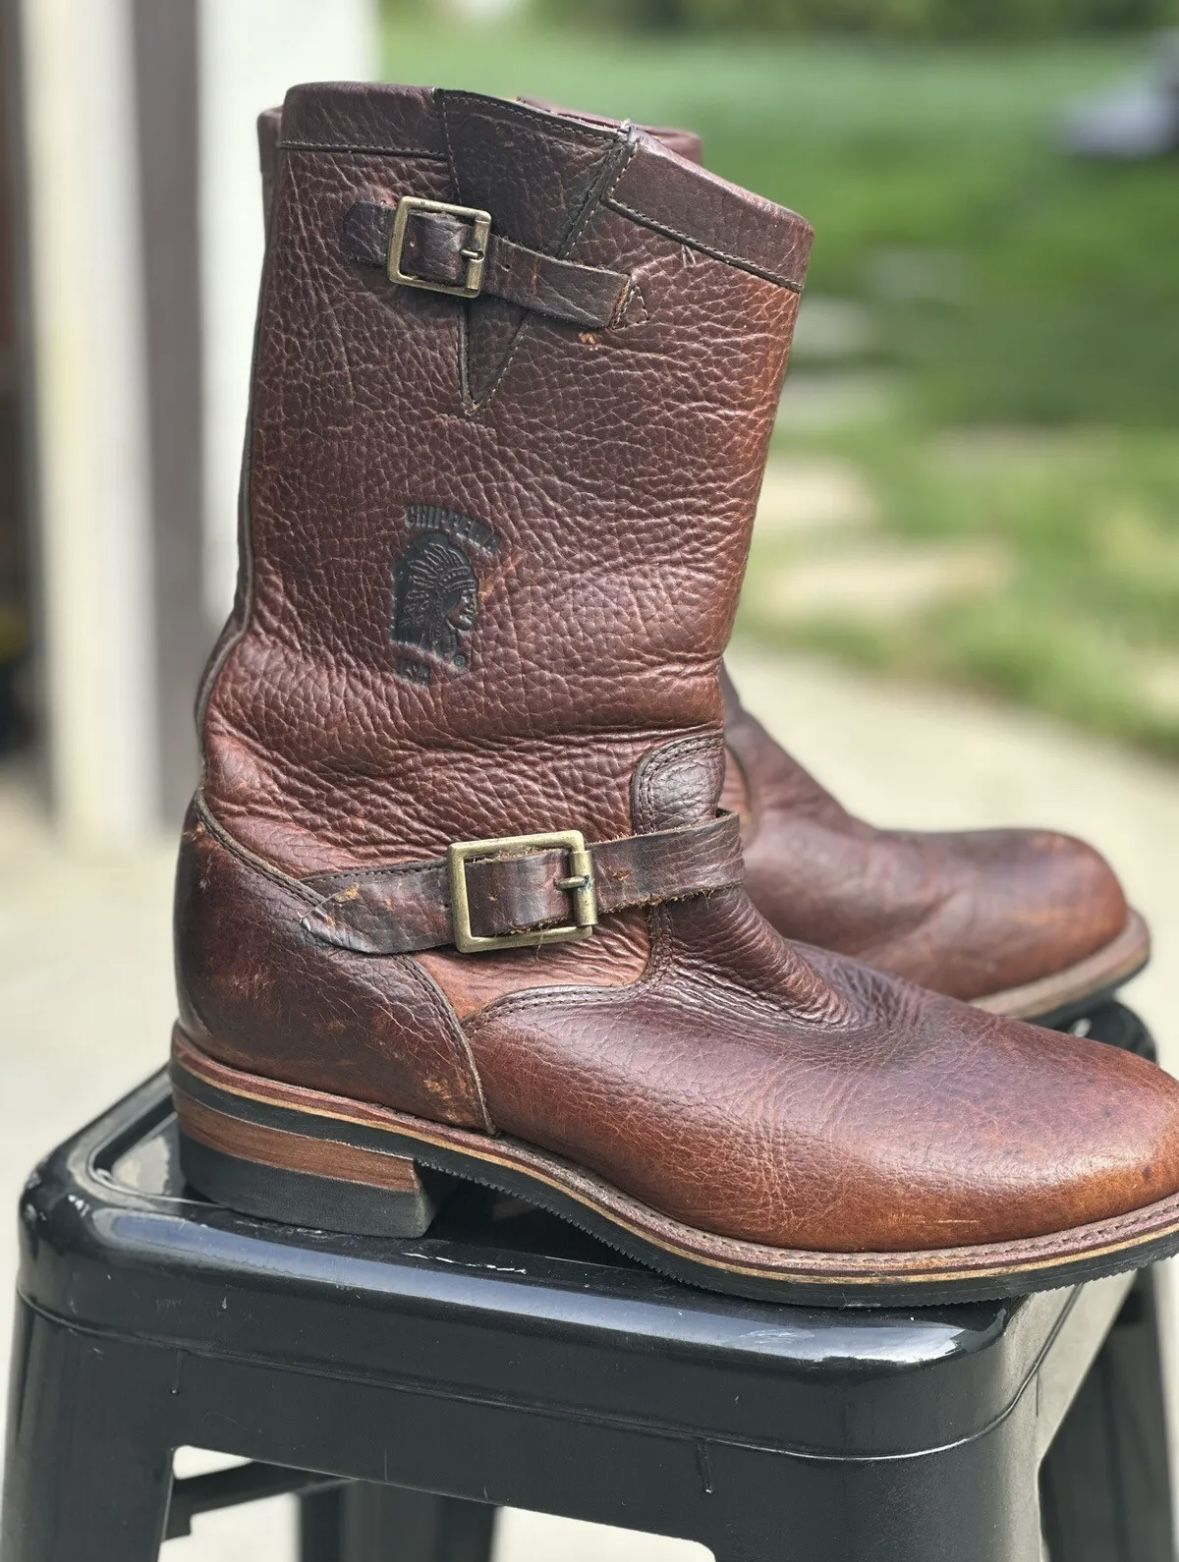 Chippewa Engineer Boots $150